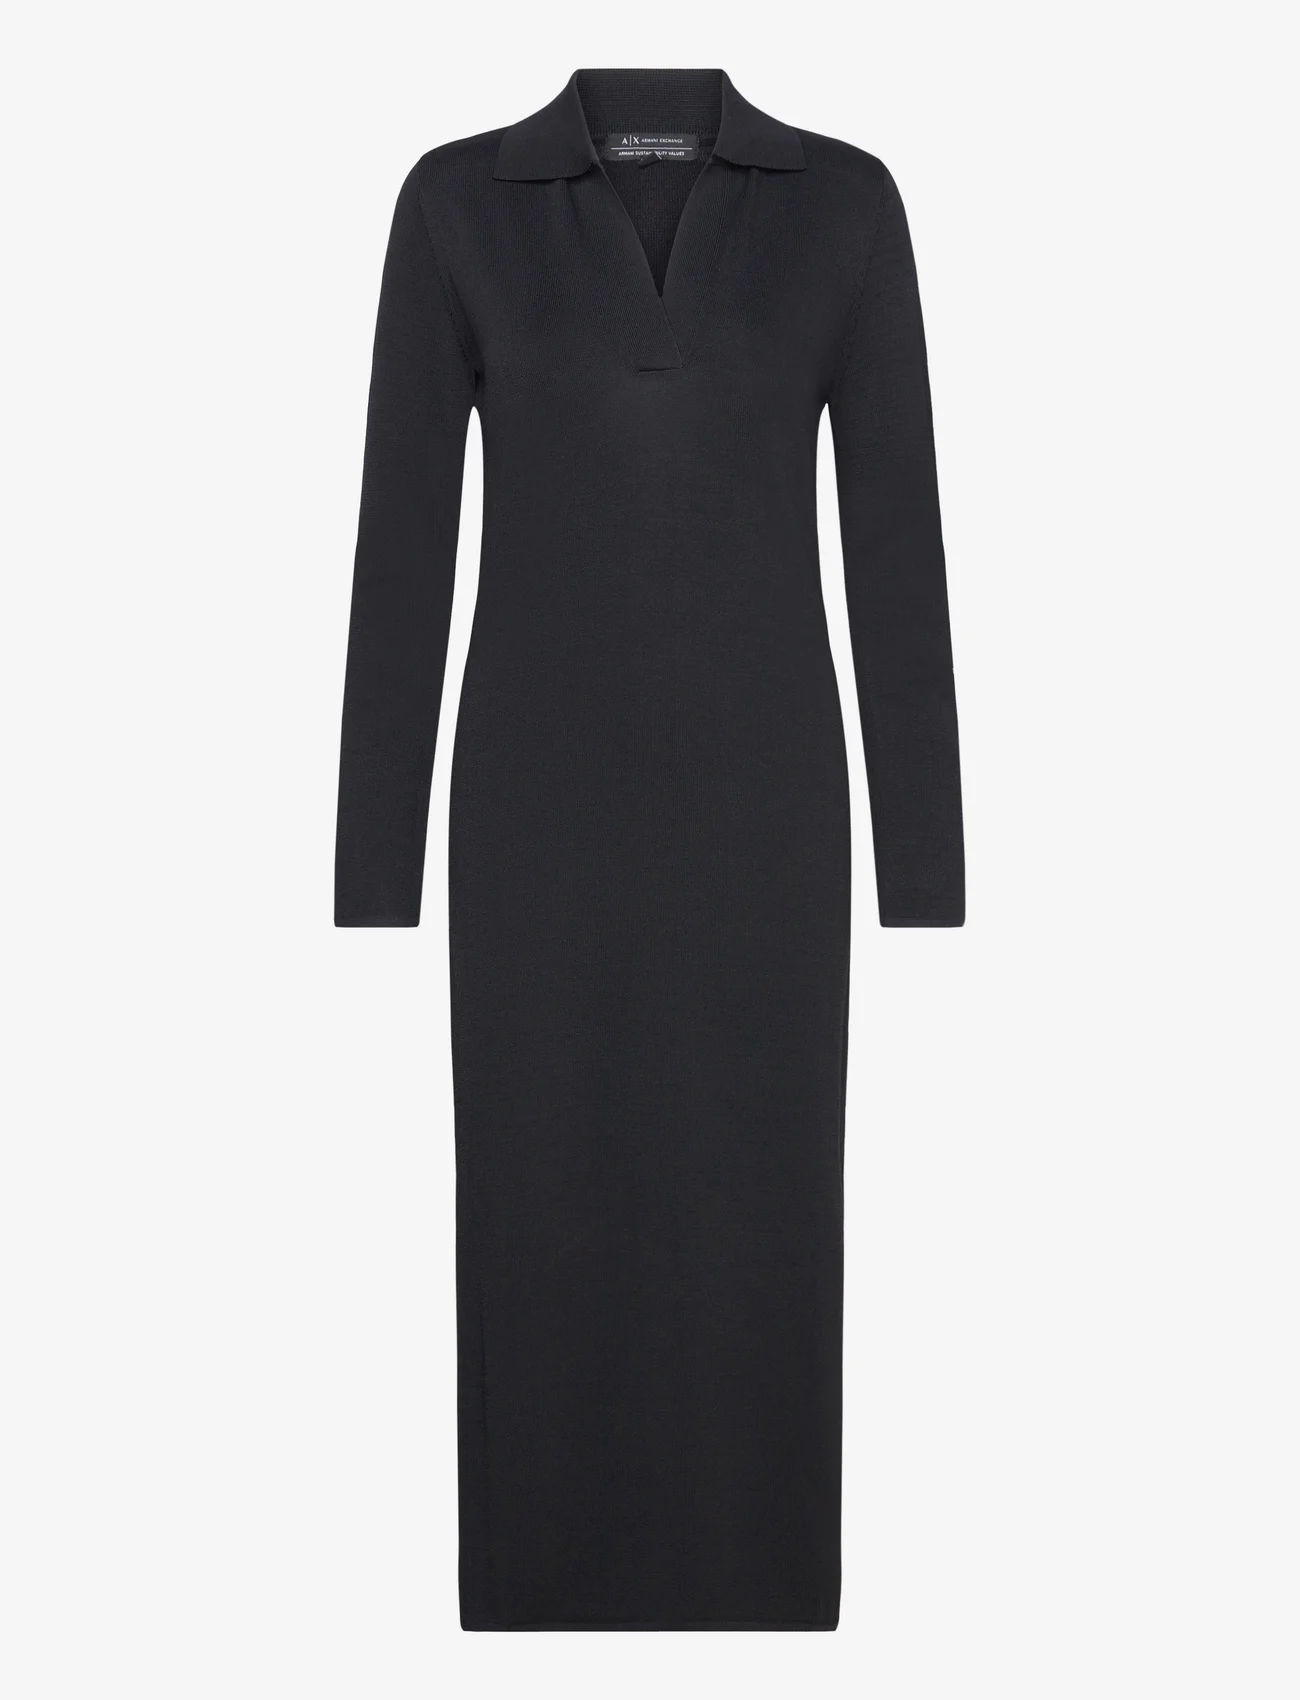 Armani Exchange - DRESS - knitted dresses - 1200-black - 0